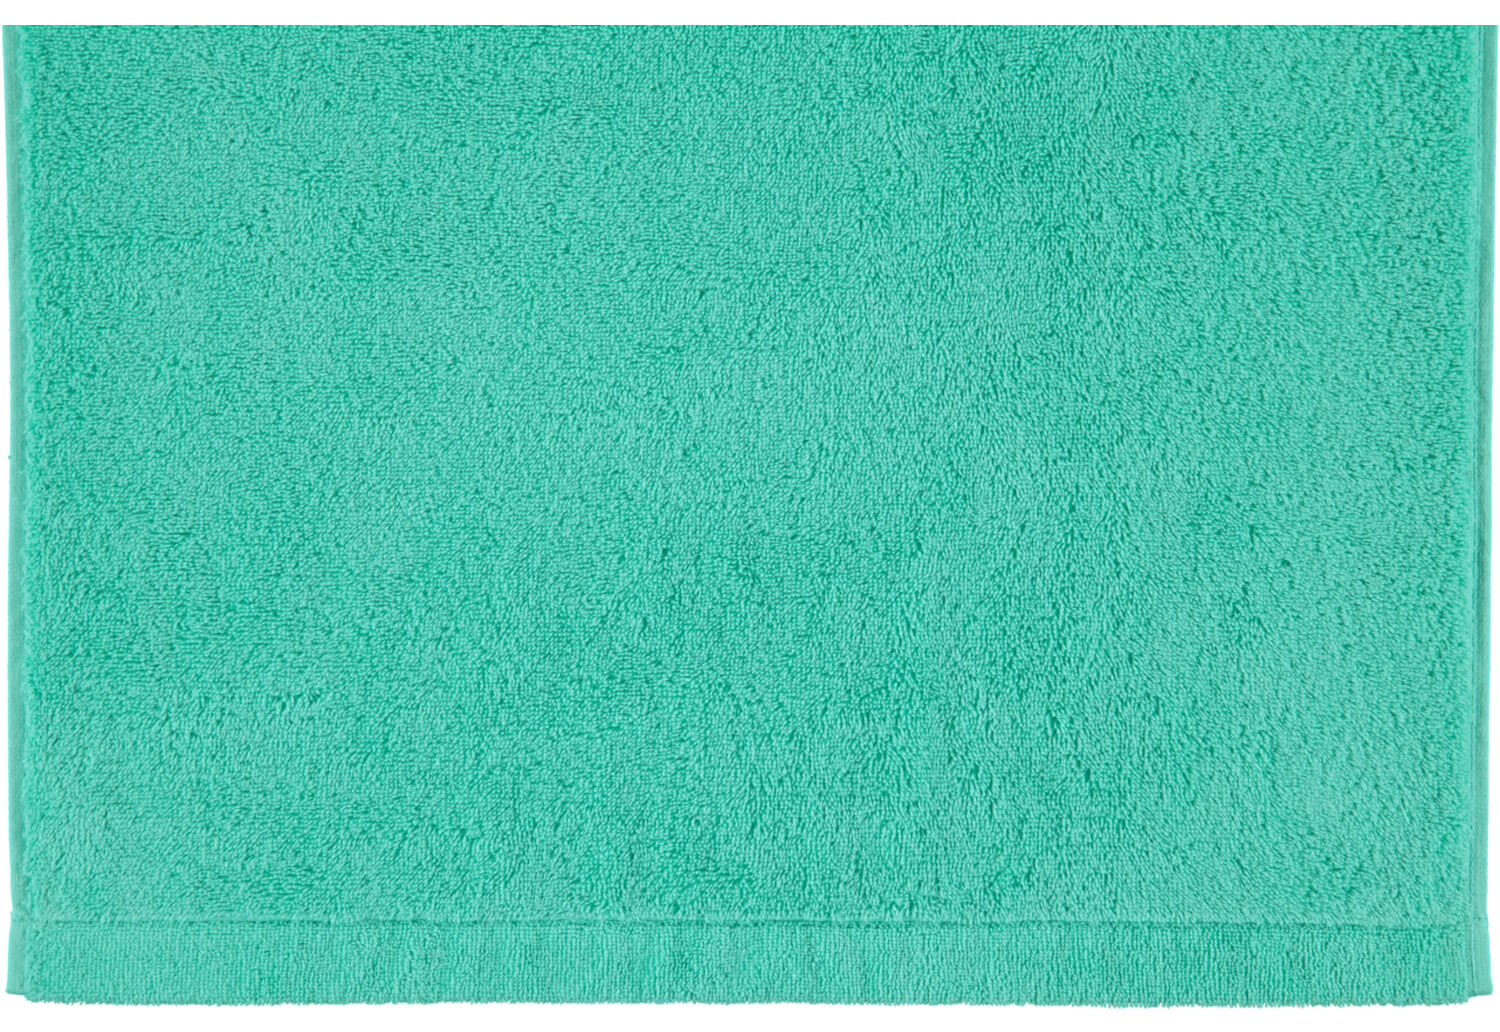 Банное полотенце Lifestyle Pappermint ☞ Размер: 30 x 50 см